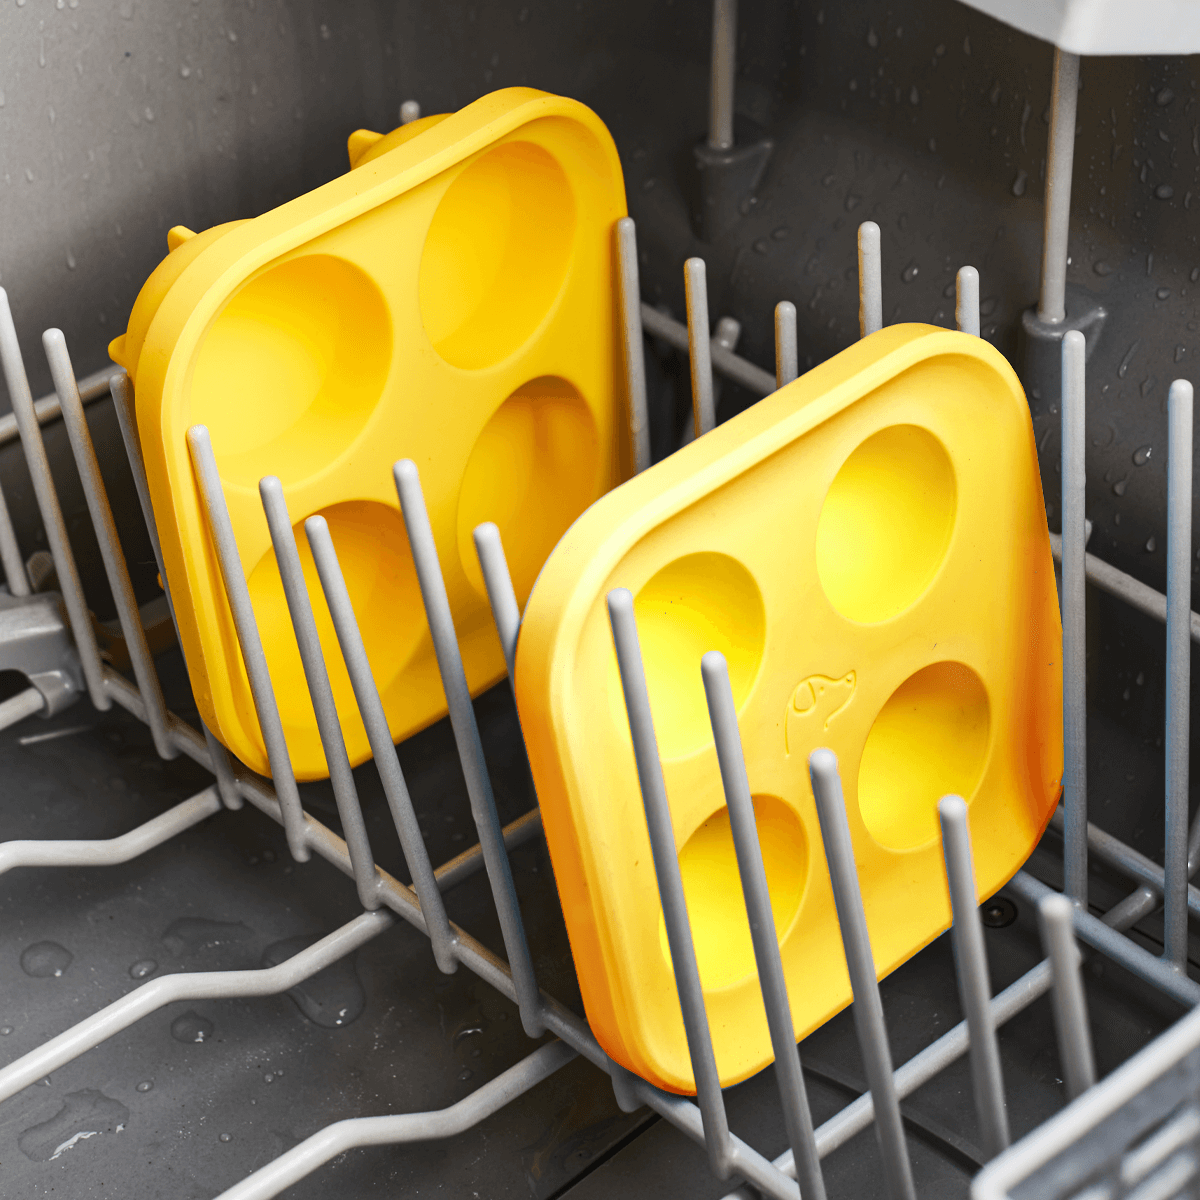 New Treat Tray Mold Silicone Molds for Dog Treats Dishwasher Safe